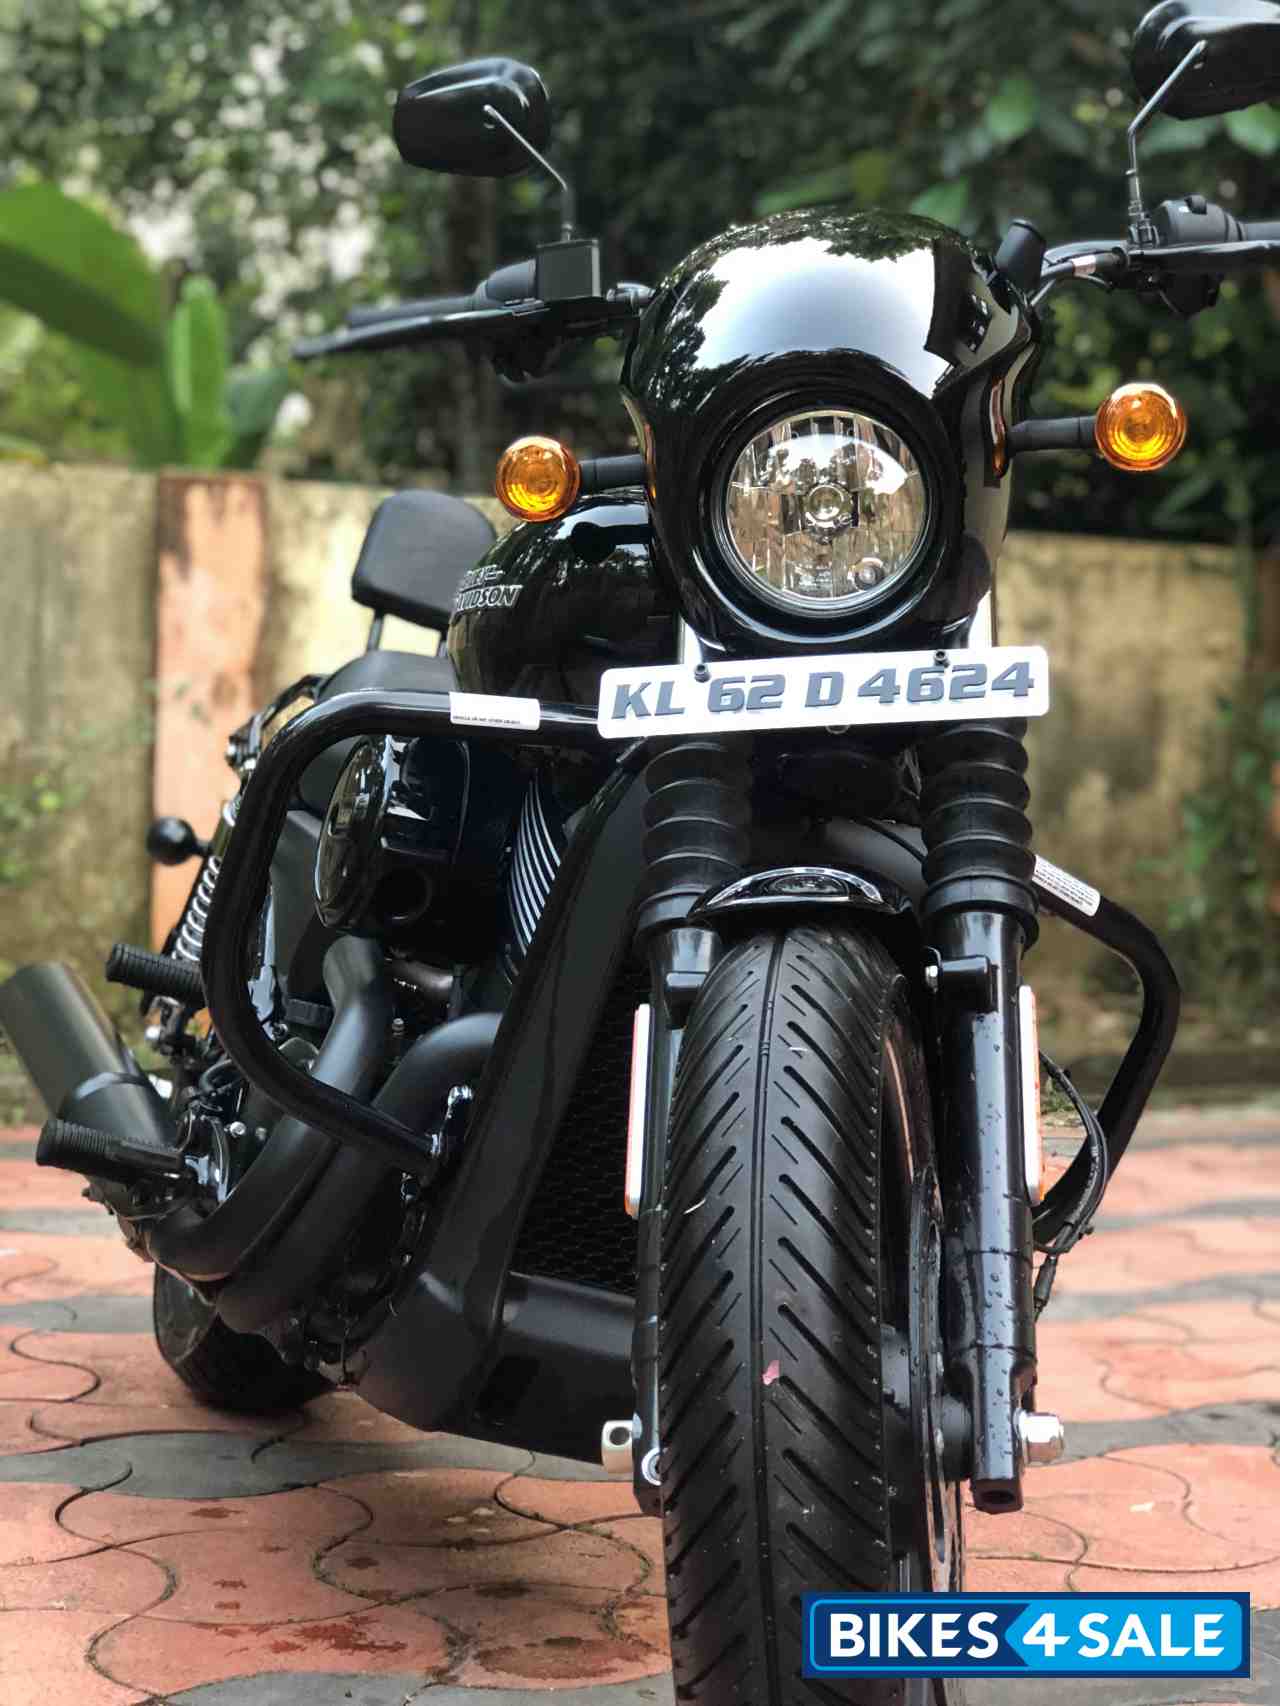 Harley Davidson Street 500 Price In Kerala Promotion Off54